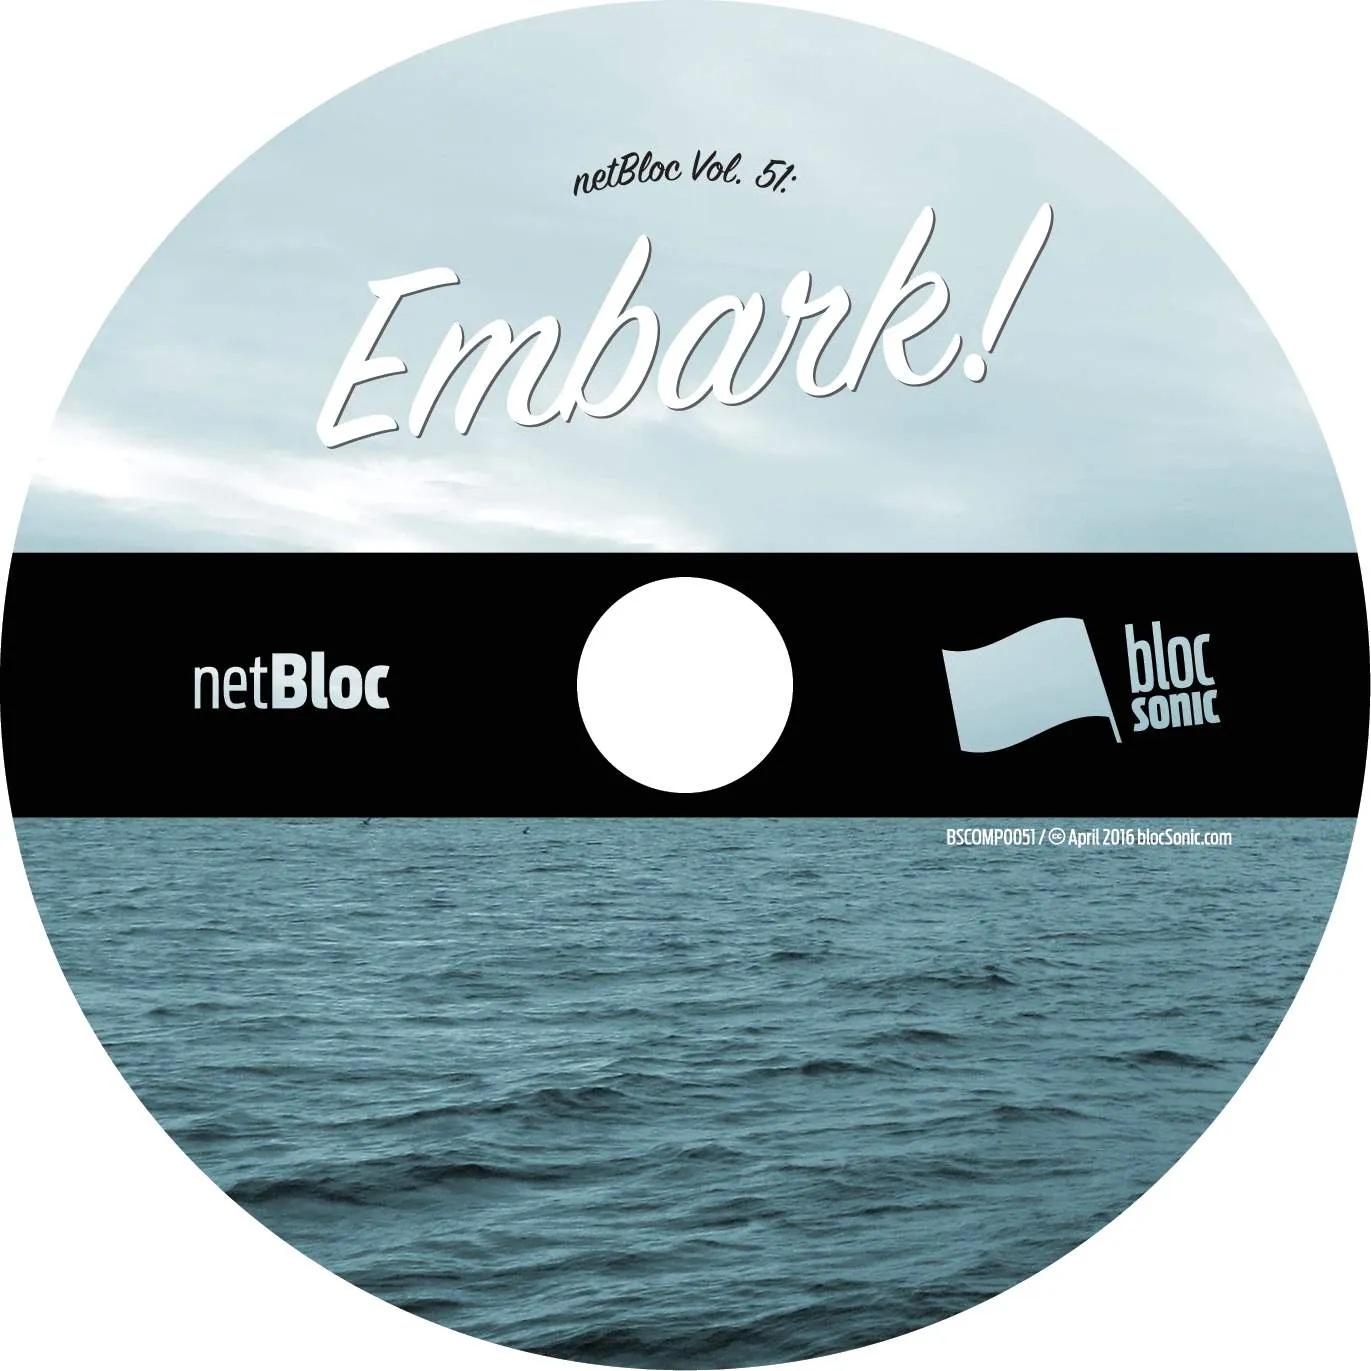 Album disc for “netBloc Vol. 51: Embark!” by Various Artists